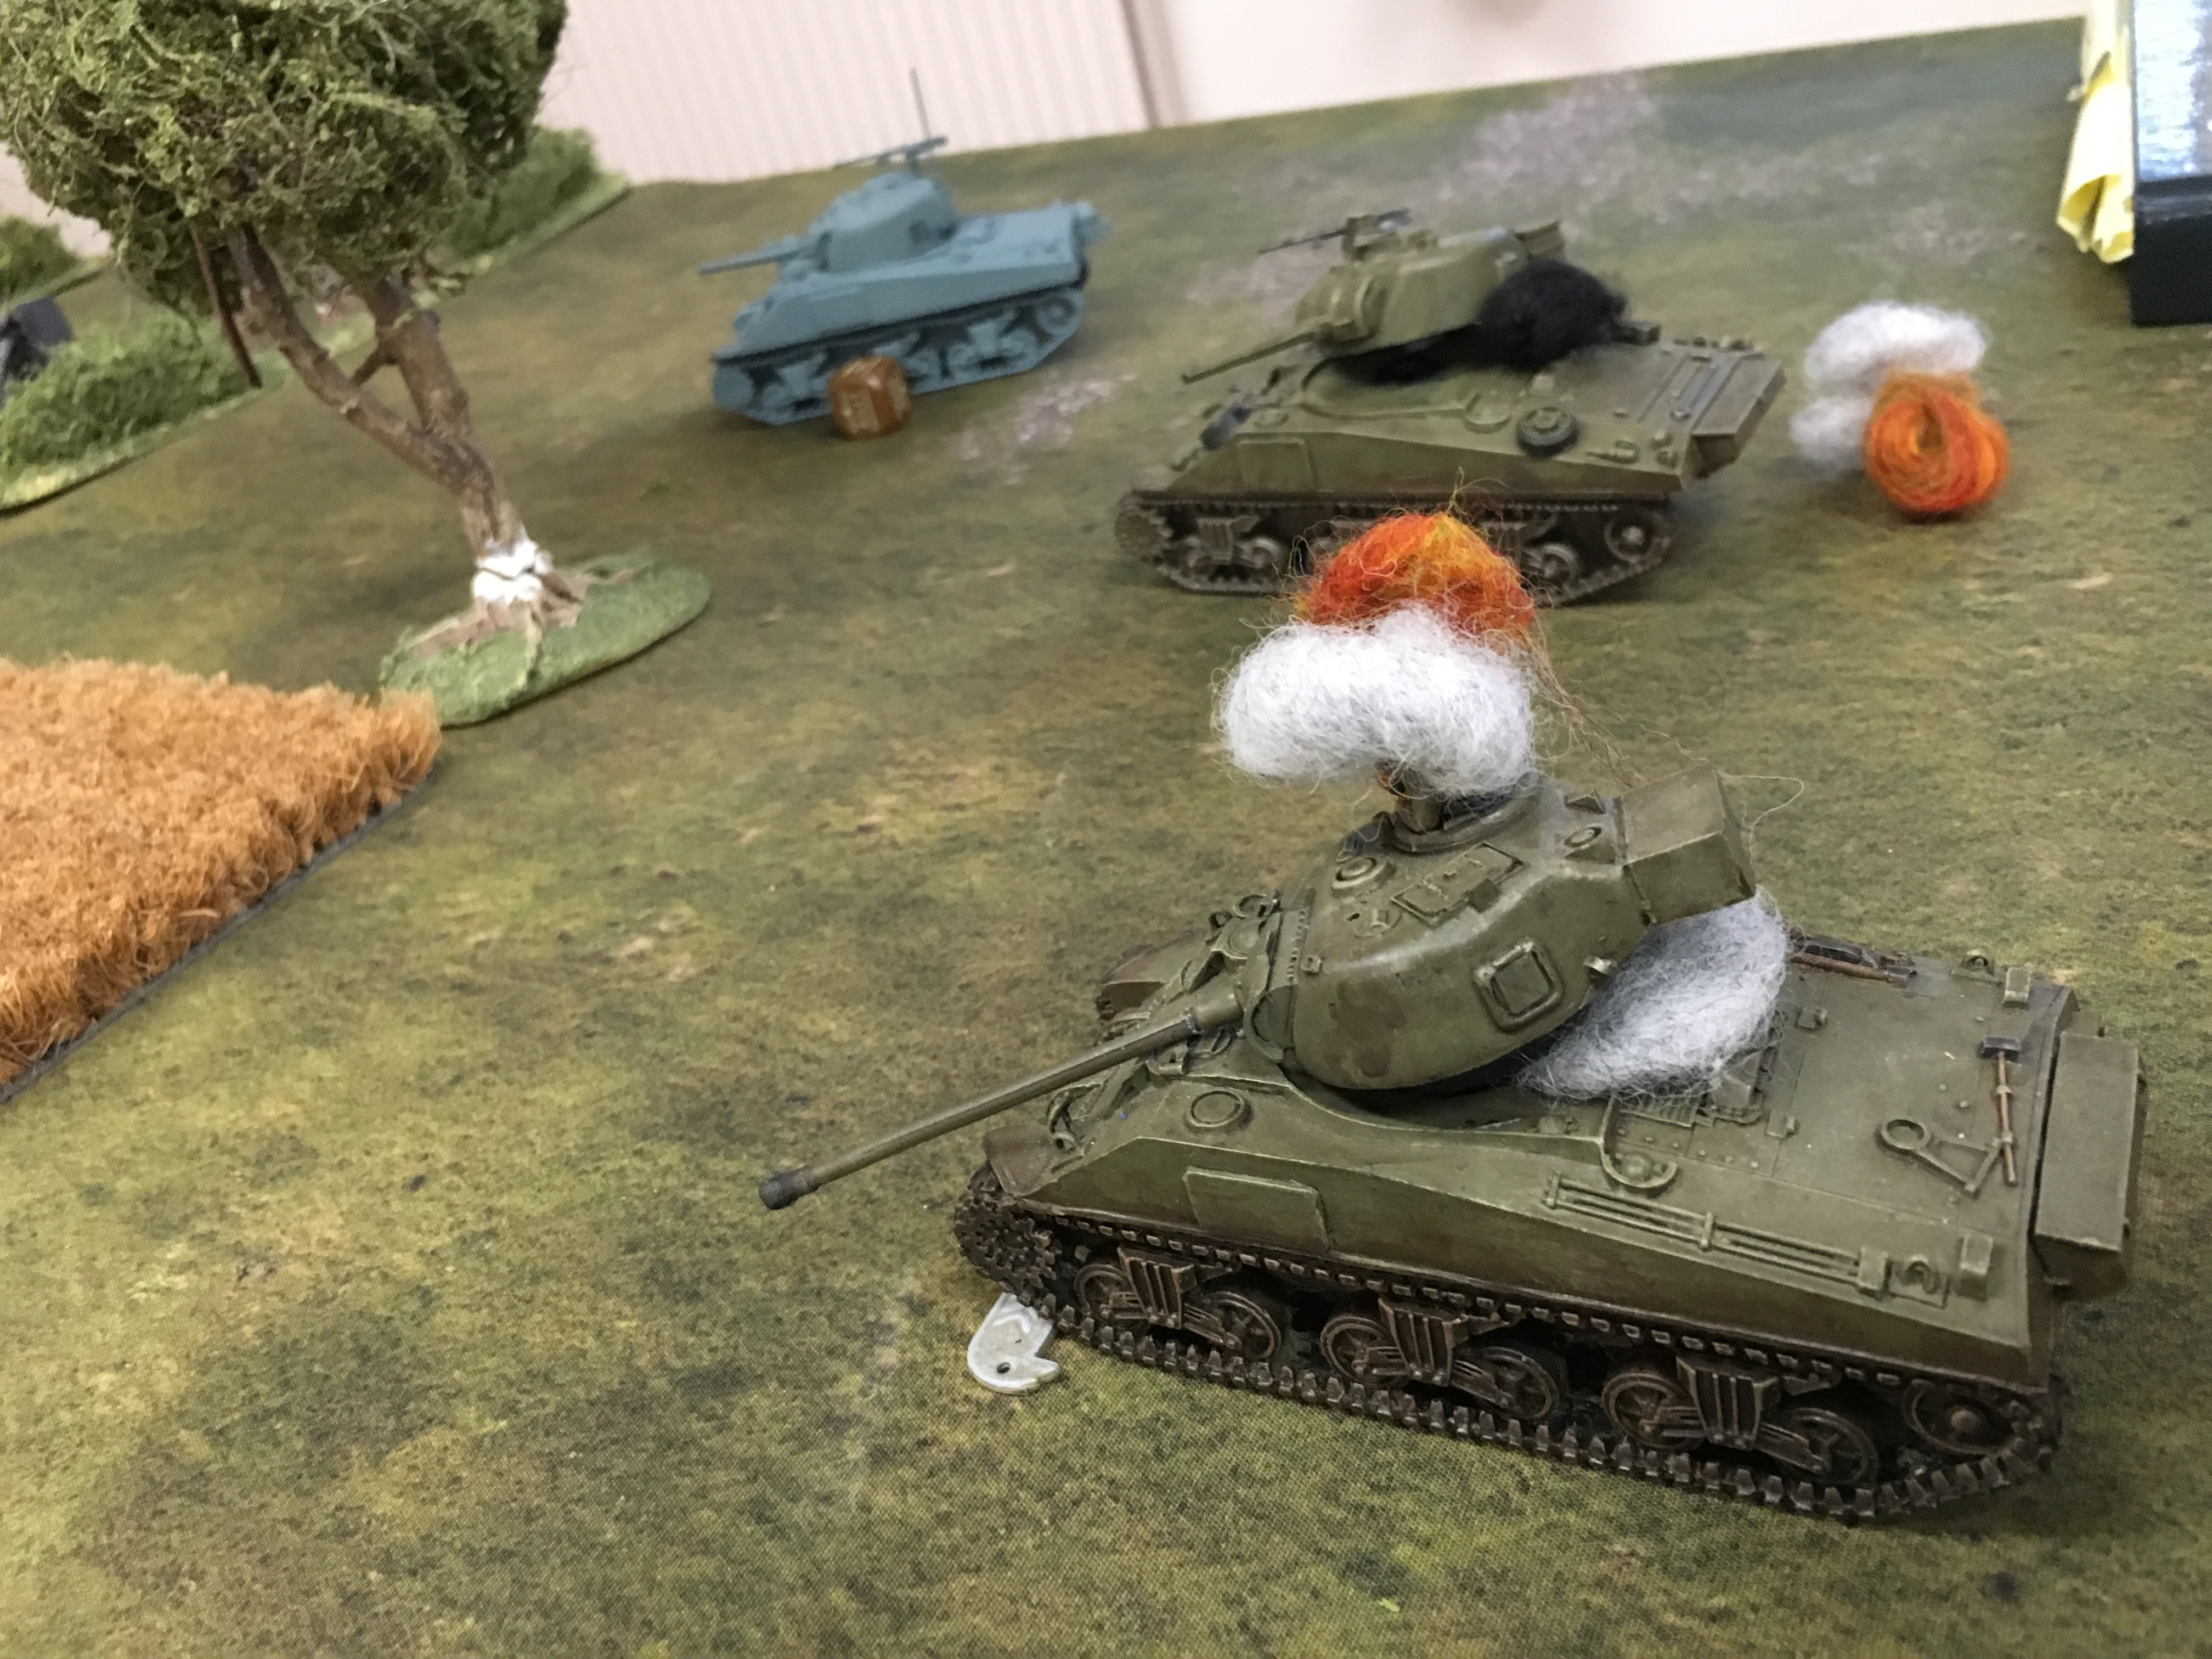 German grenadier’s versus Nellyforce in an armoured engagement